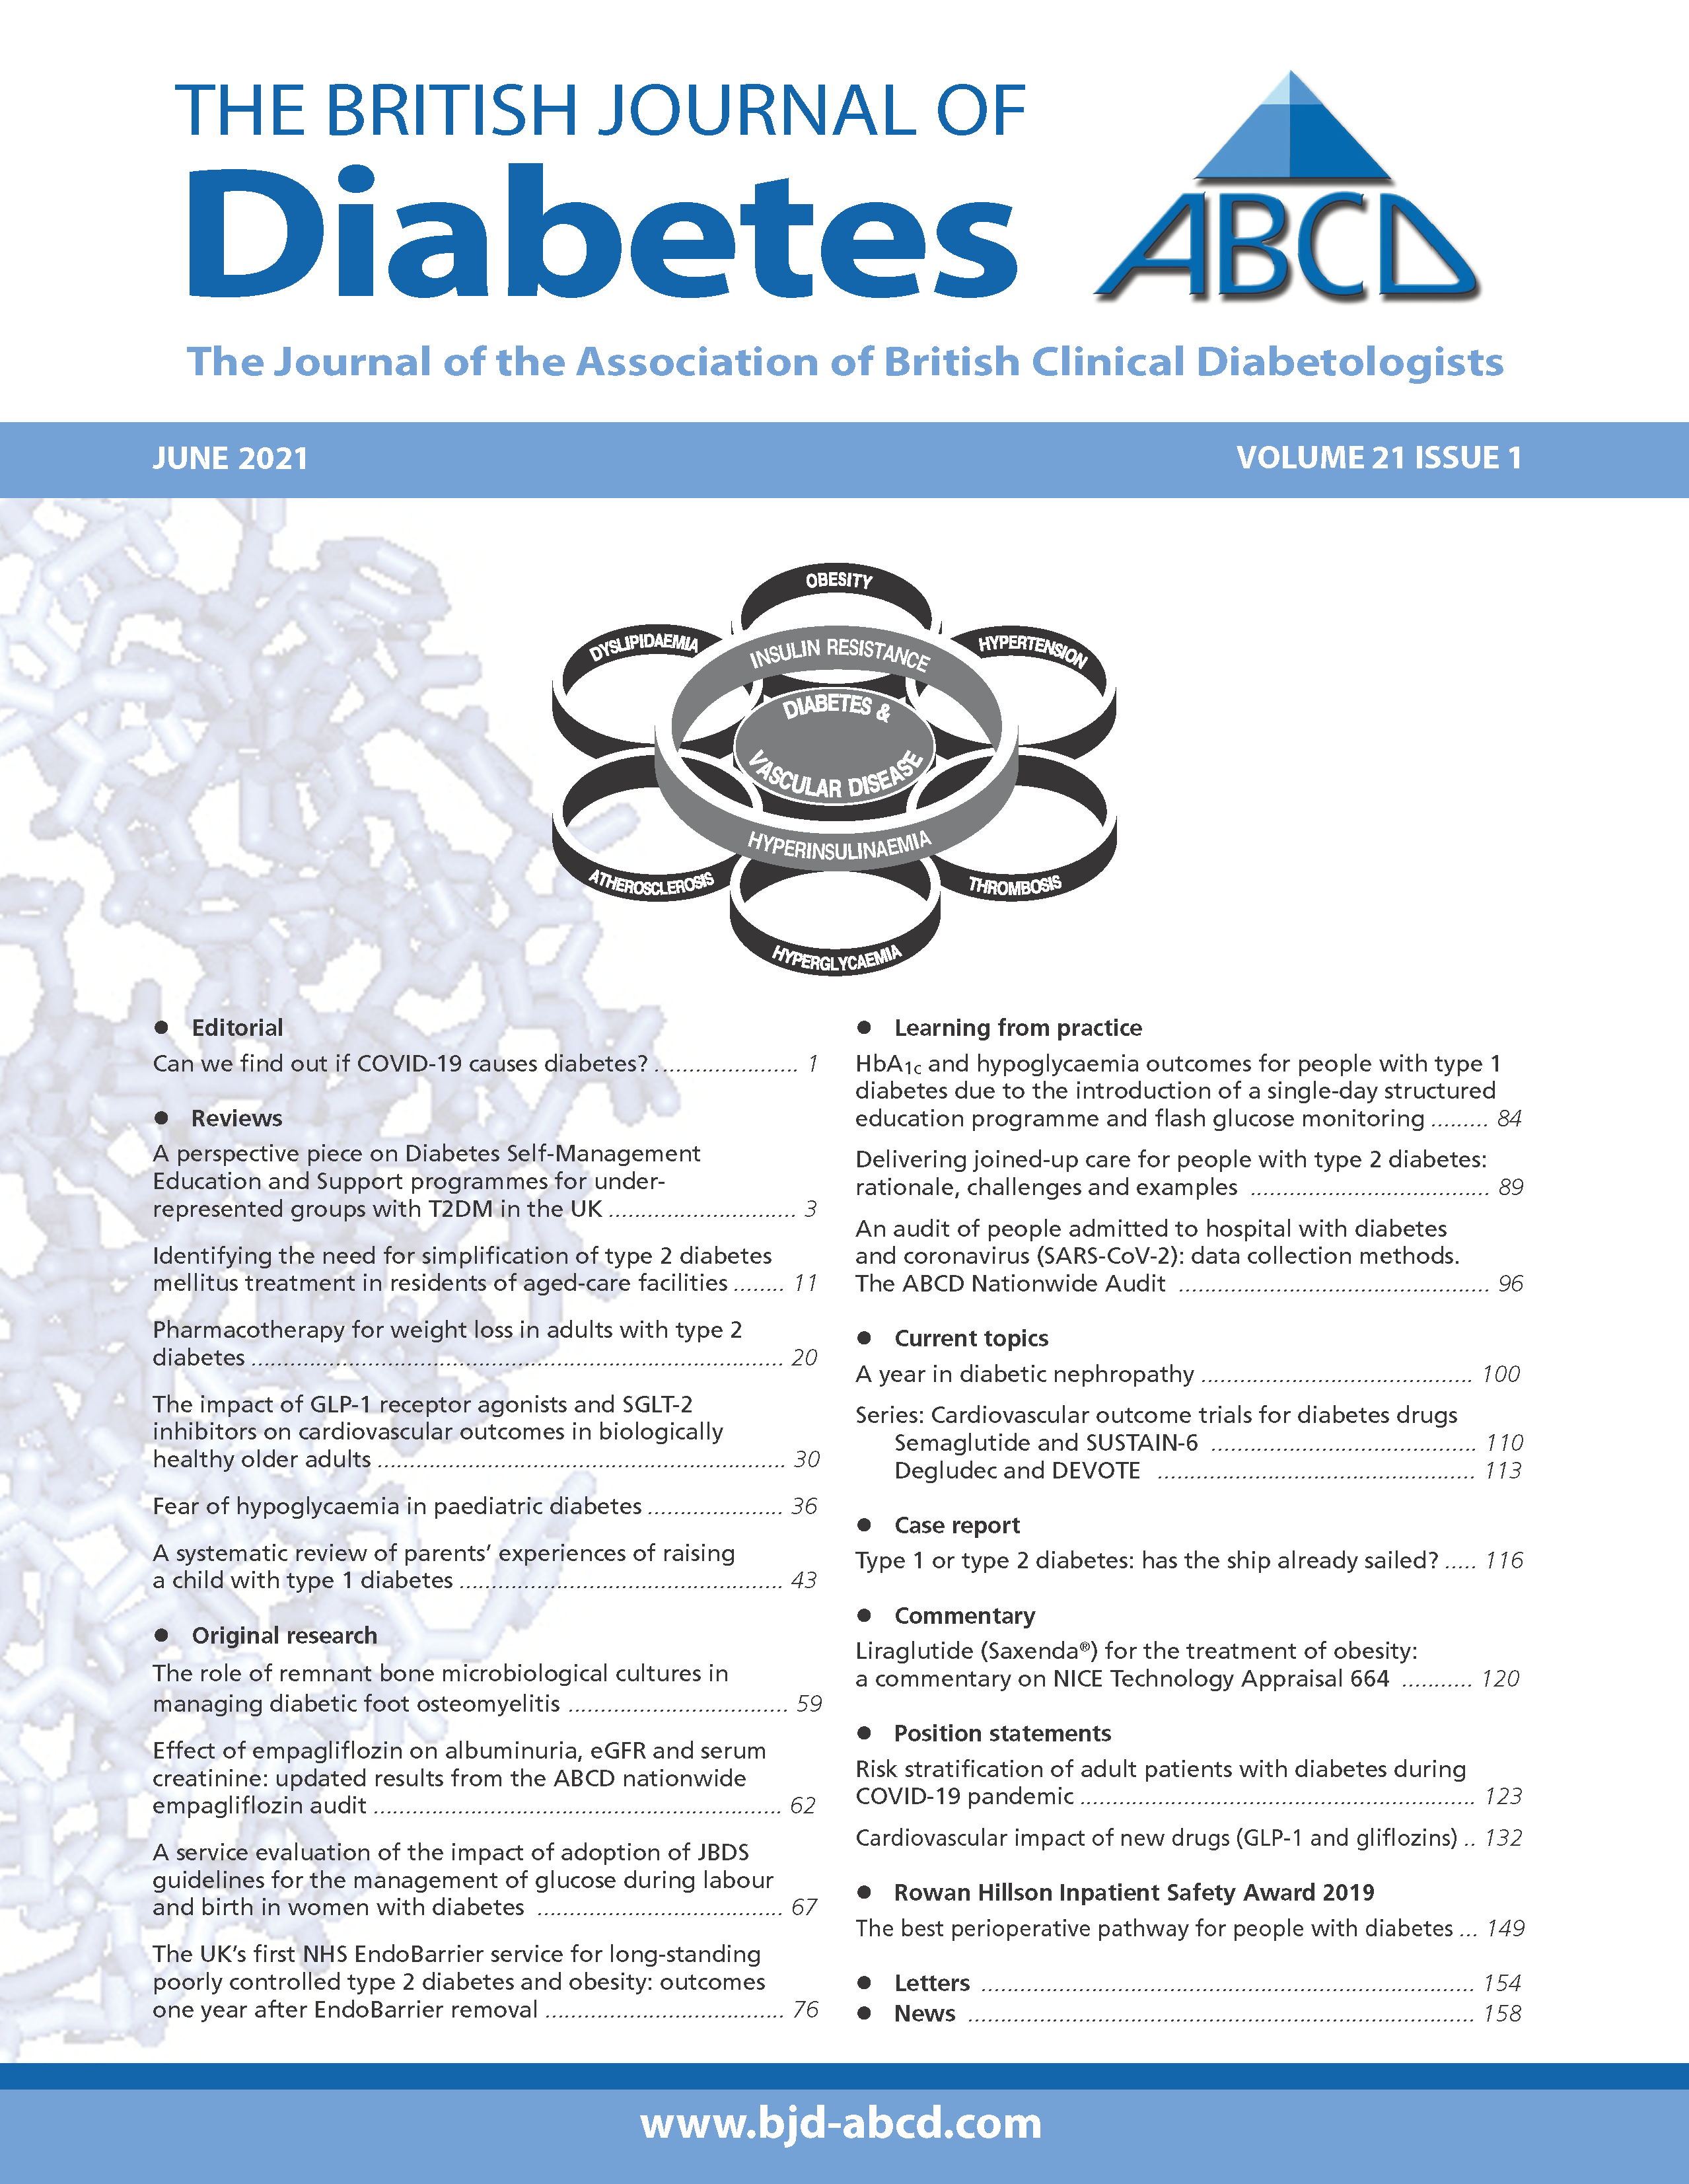 british journal of diabetes and vascular disease impact factor